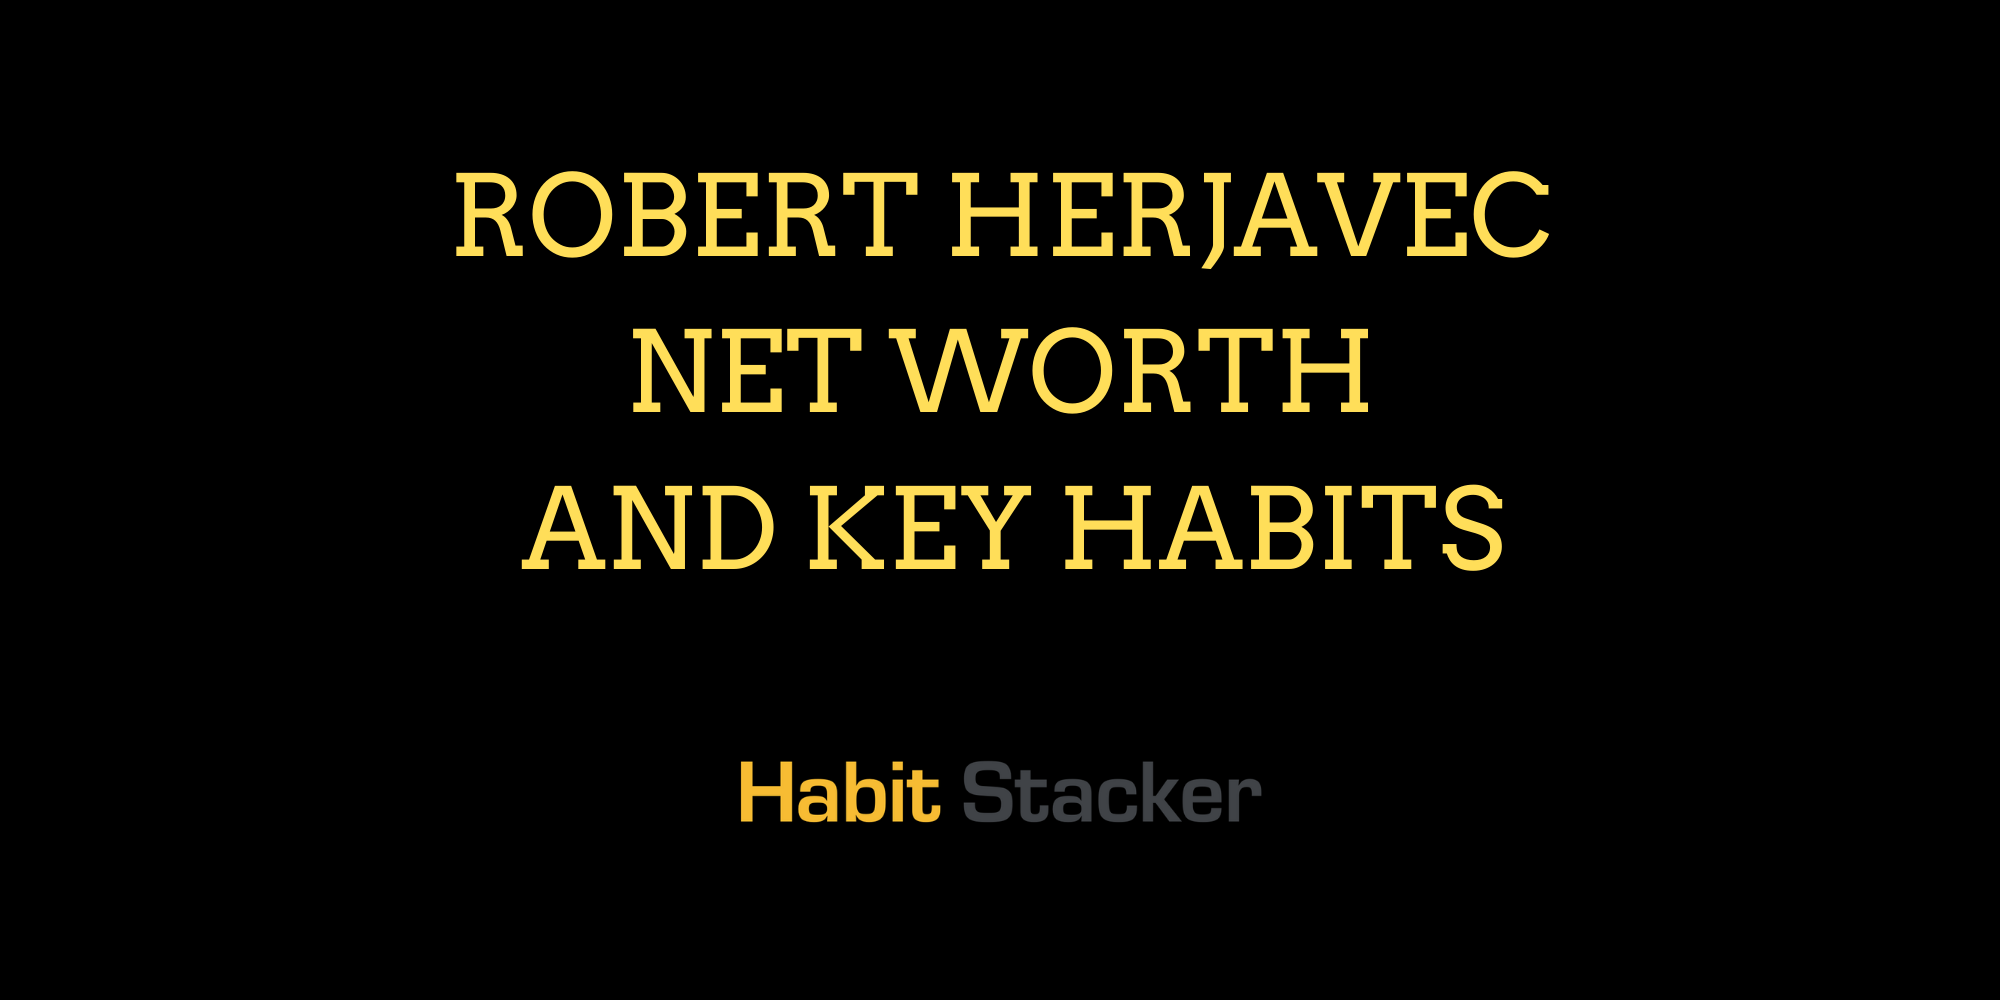 Robert Herjavec Net Worth and Key Habits